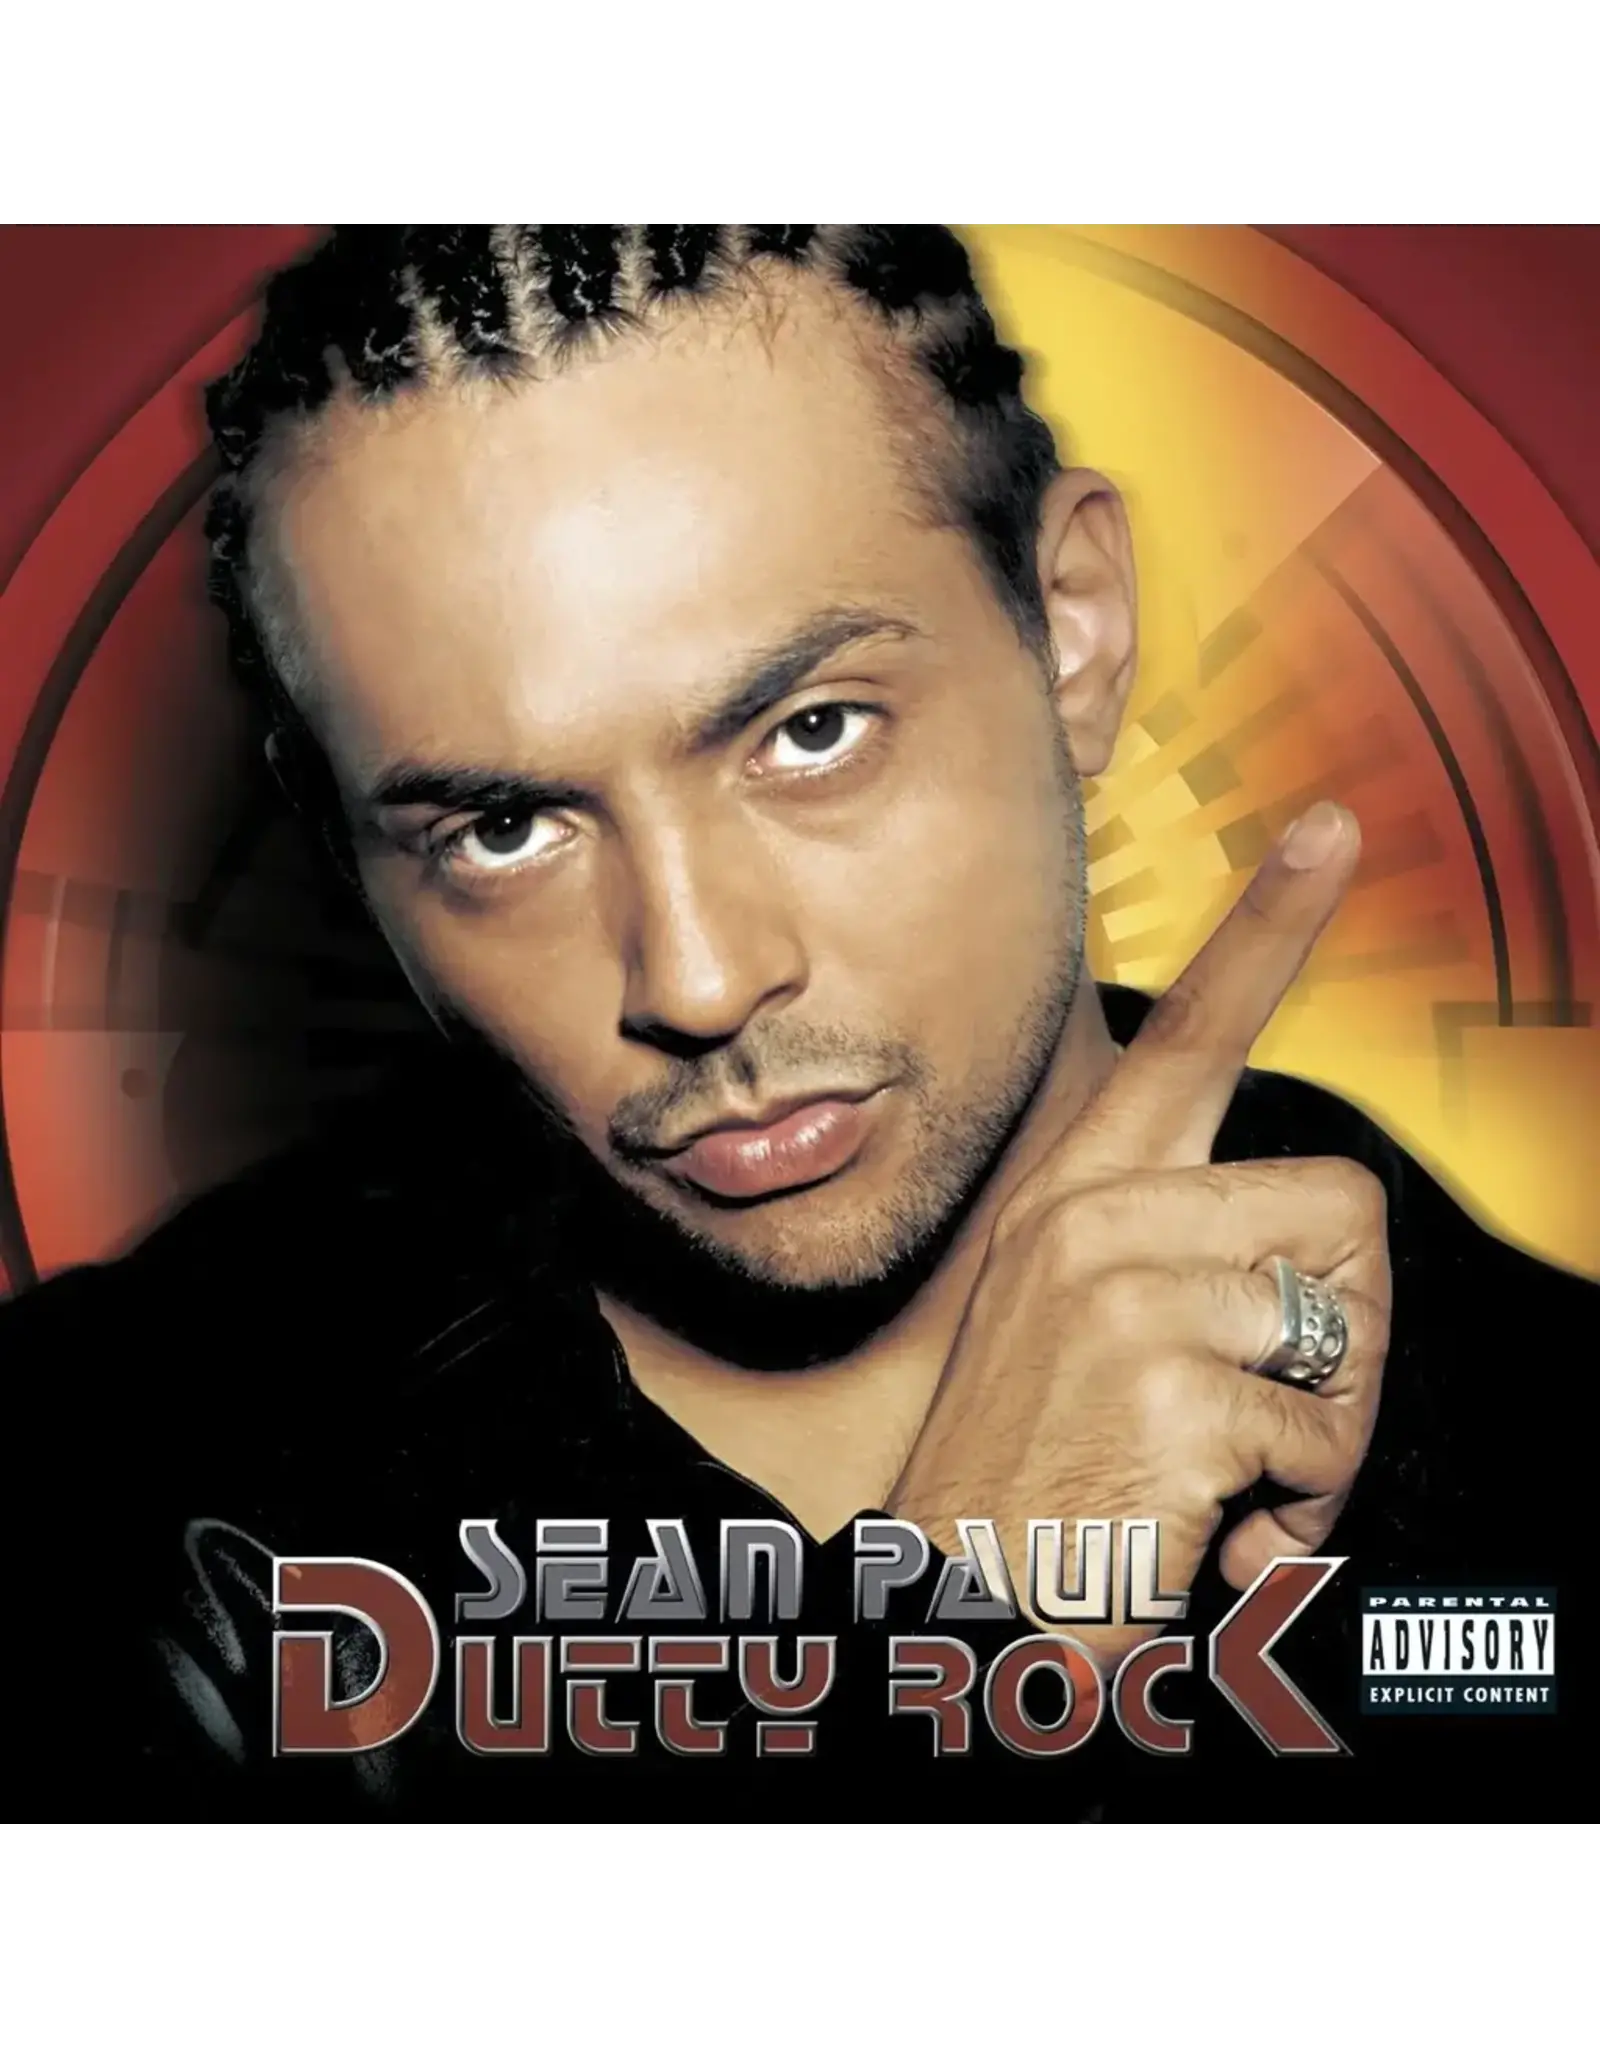 Sean Paul - Dutty Rock (Deluxe Edition) [Crystal Clear Vinyl]